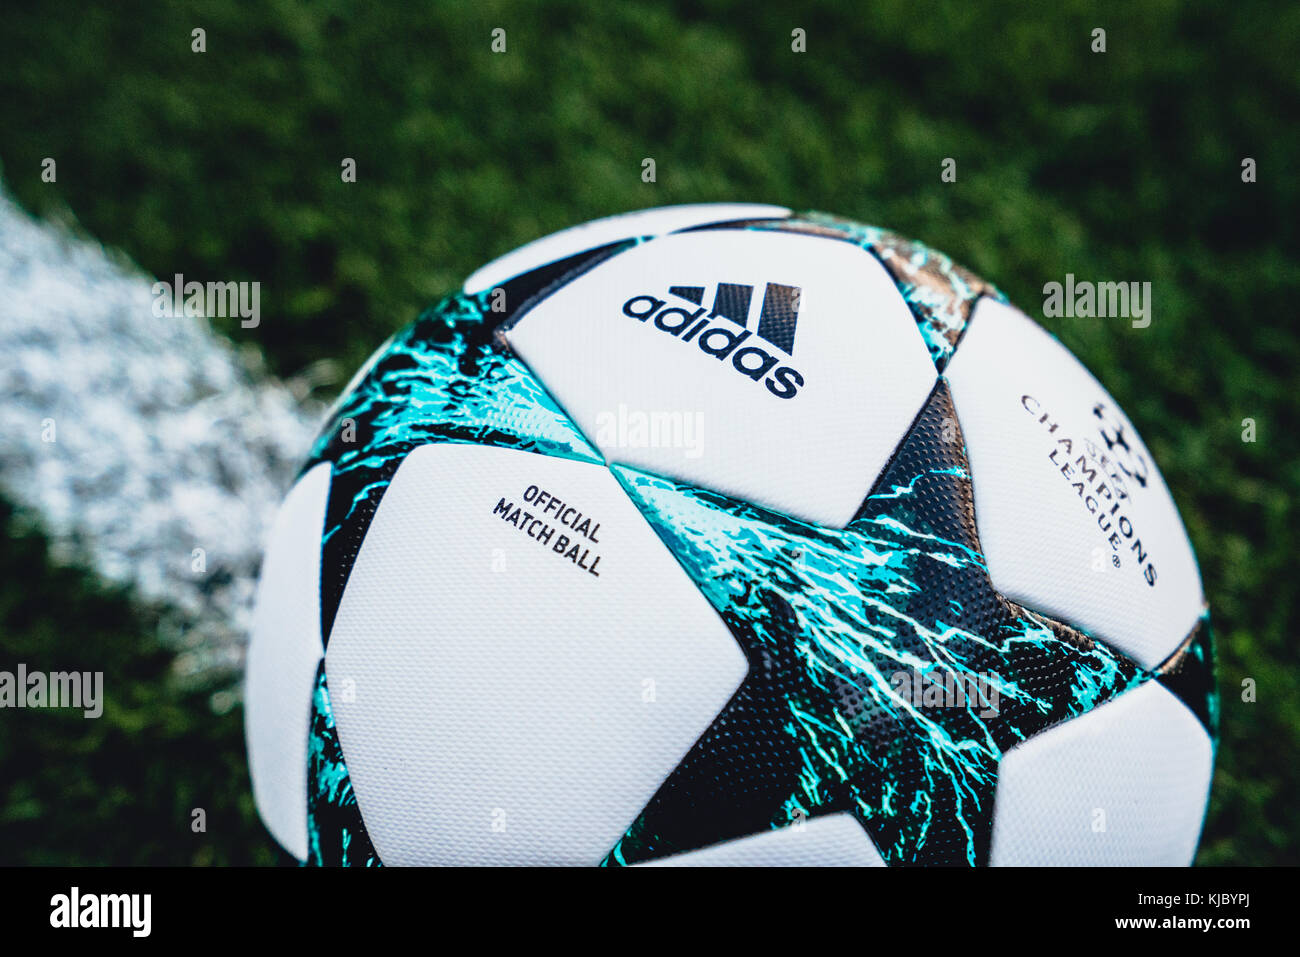 official UEFA Champions League Ball of Season 2017/2018 Stock Photo - Alamy